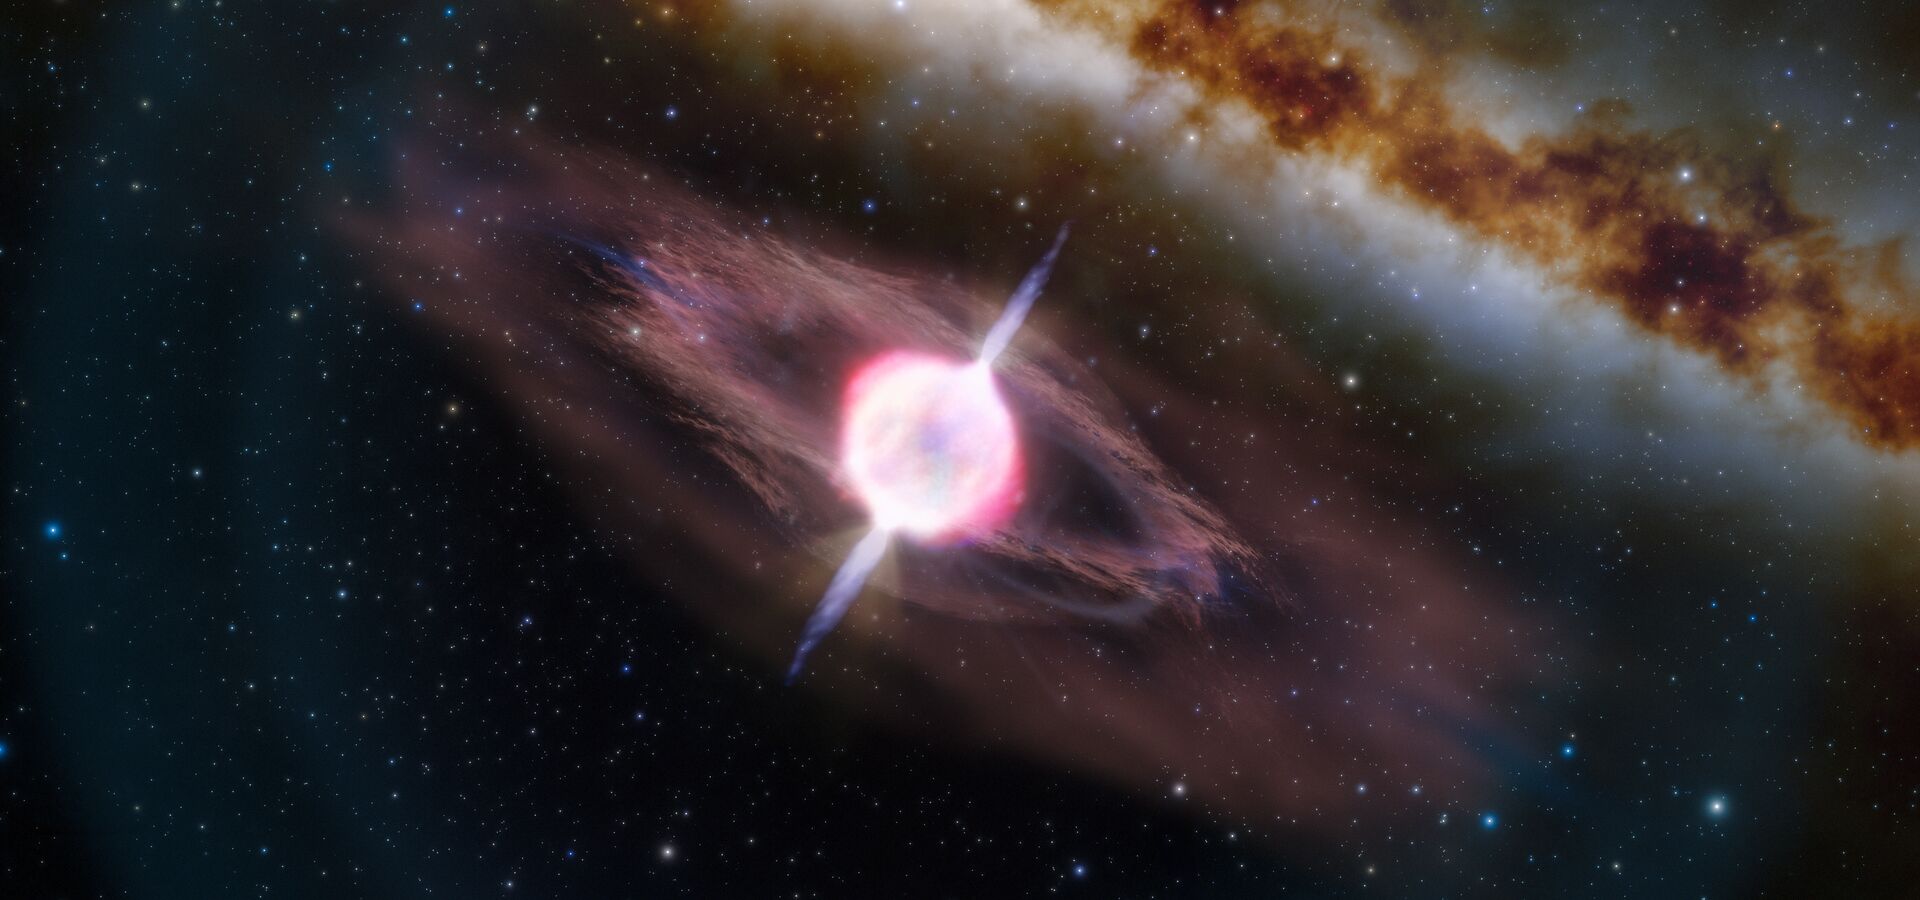 Une vue d'artiste de GRB 221009A. © International Gemini Observatory, NOIRLab, NSF, AURA, J. da Silva, M. Zamani